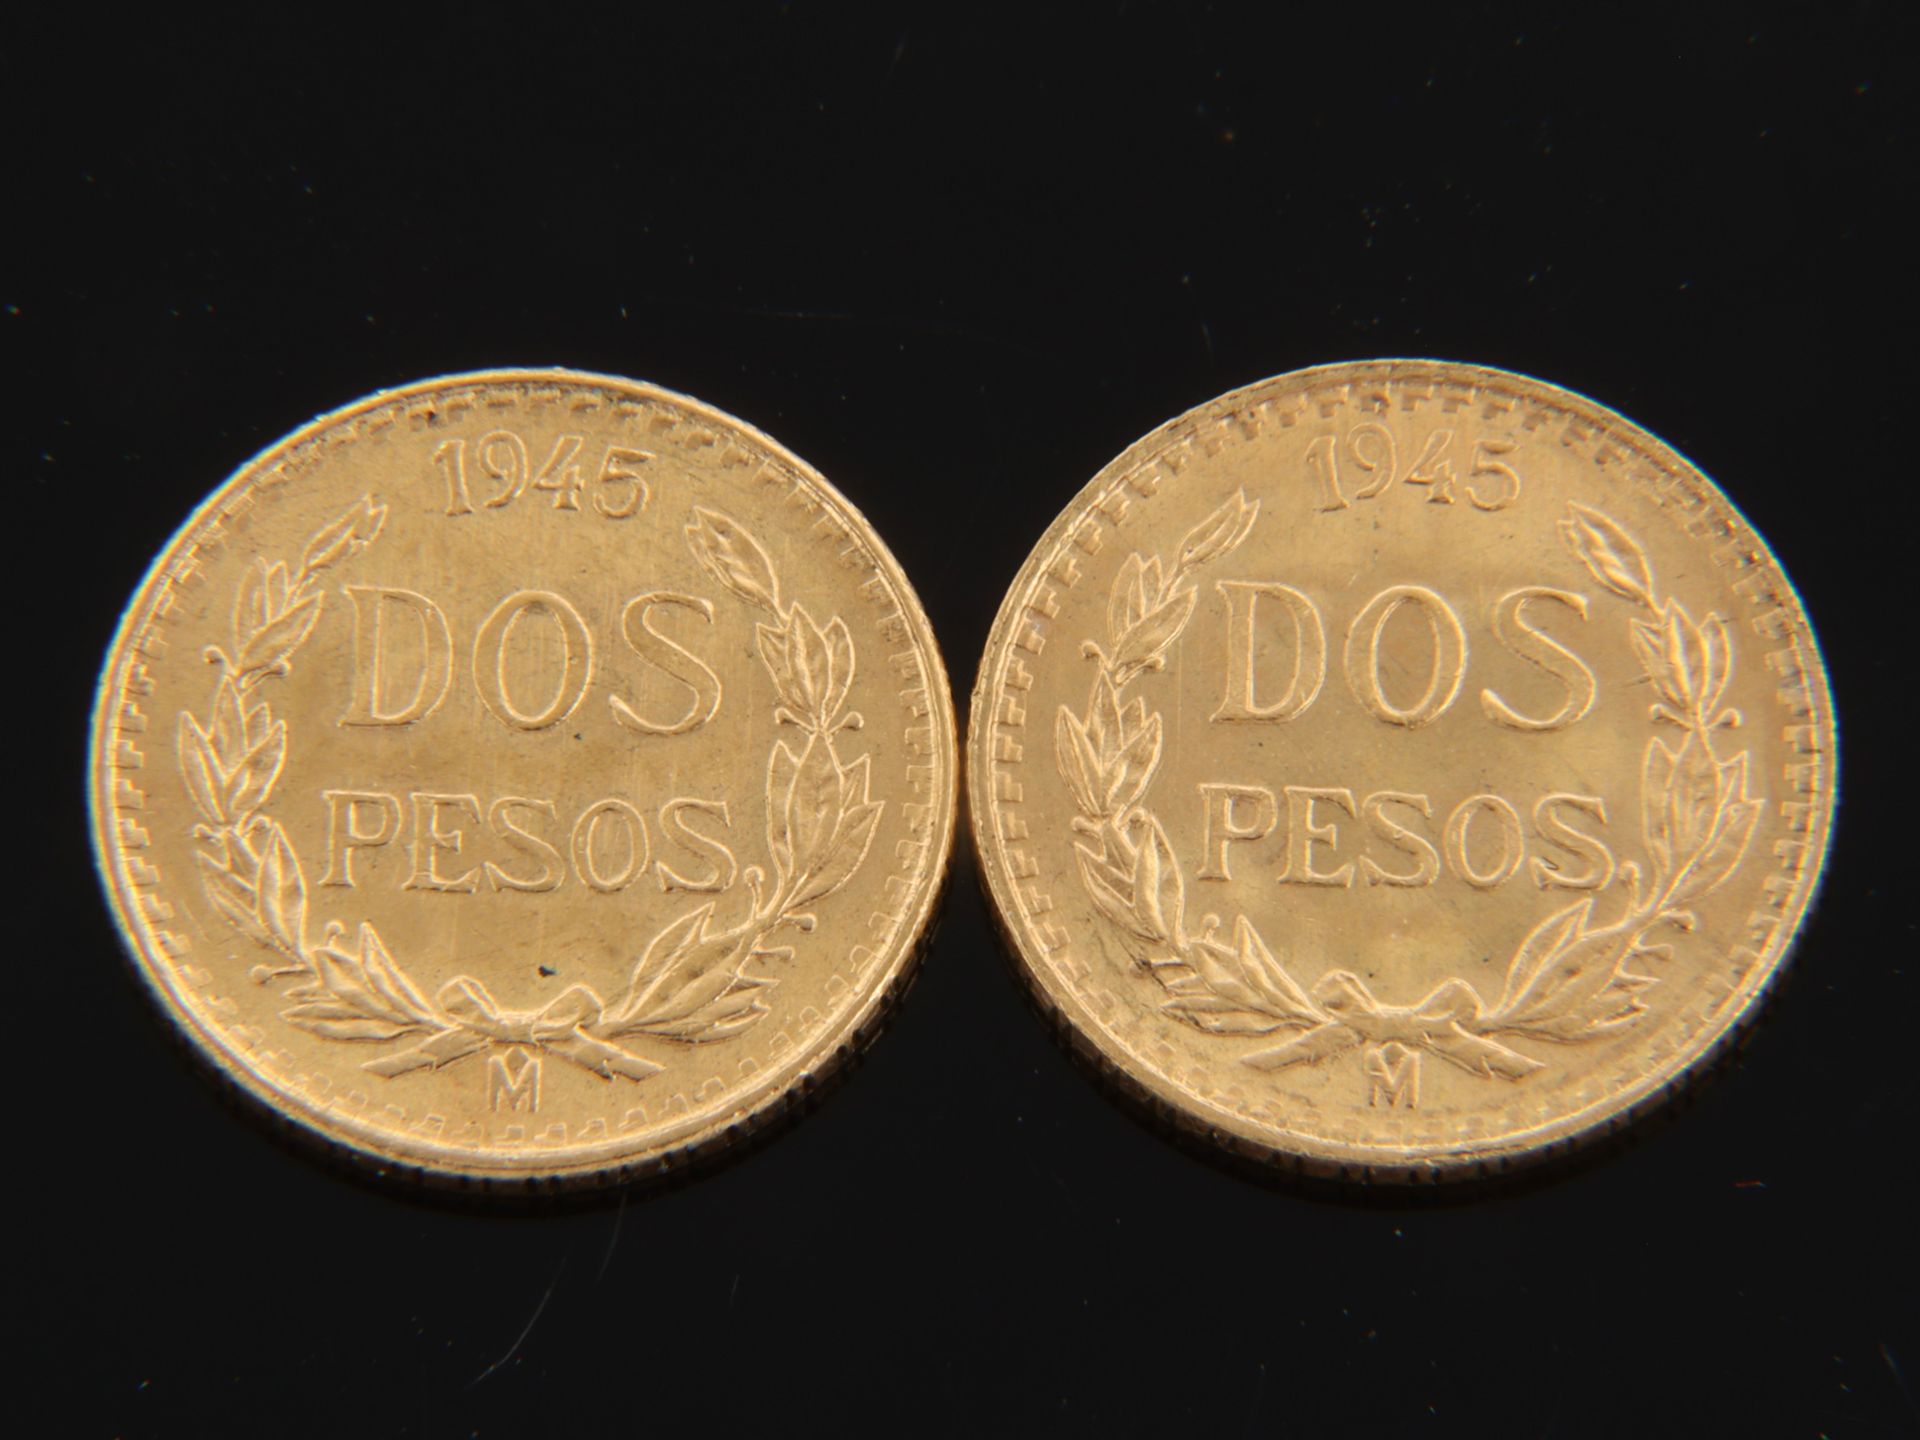 Goldmünze - 2 Pesos - Image 2 of 2